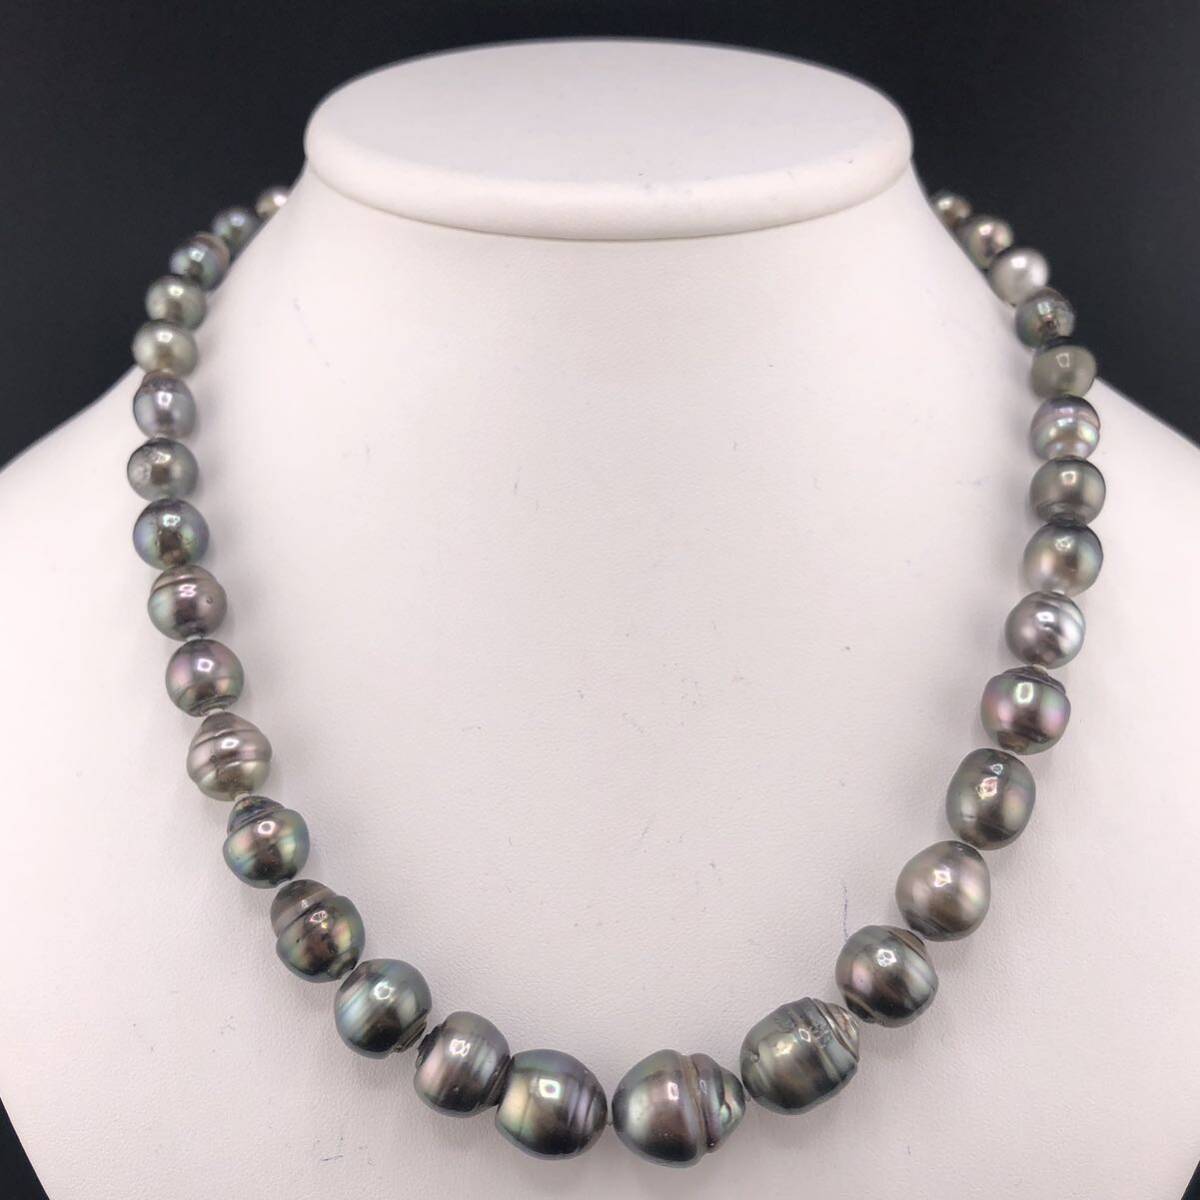 E05-1050 黒蝶パールネックレス 8.0mm~14.0mm 47cm 69.3g ( 黒蝶真珠 Pearl necklace SILVER )の画像1